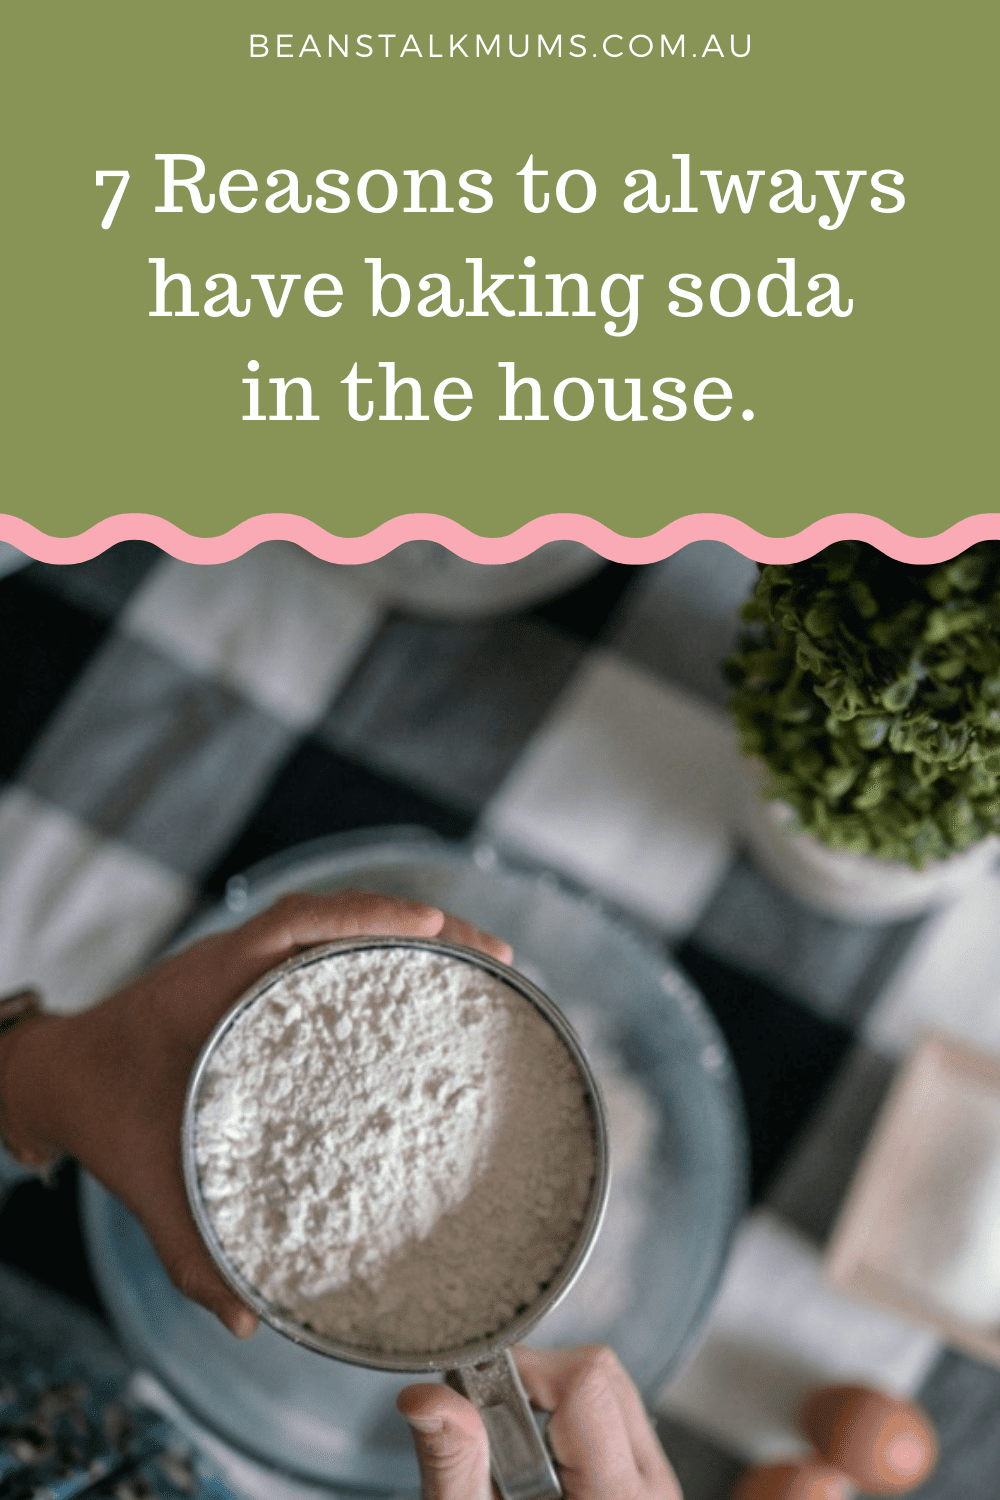 Baking soda in house | Beanstalk Single Mums Pinterest